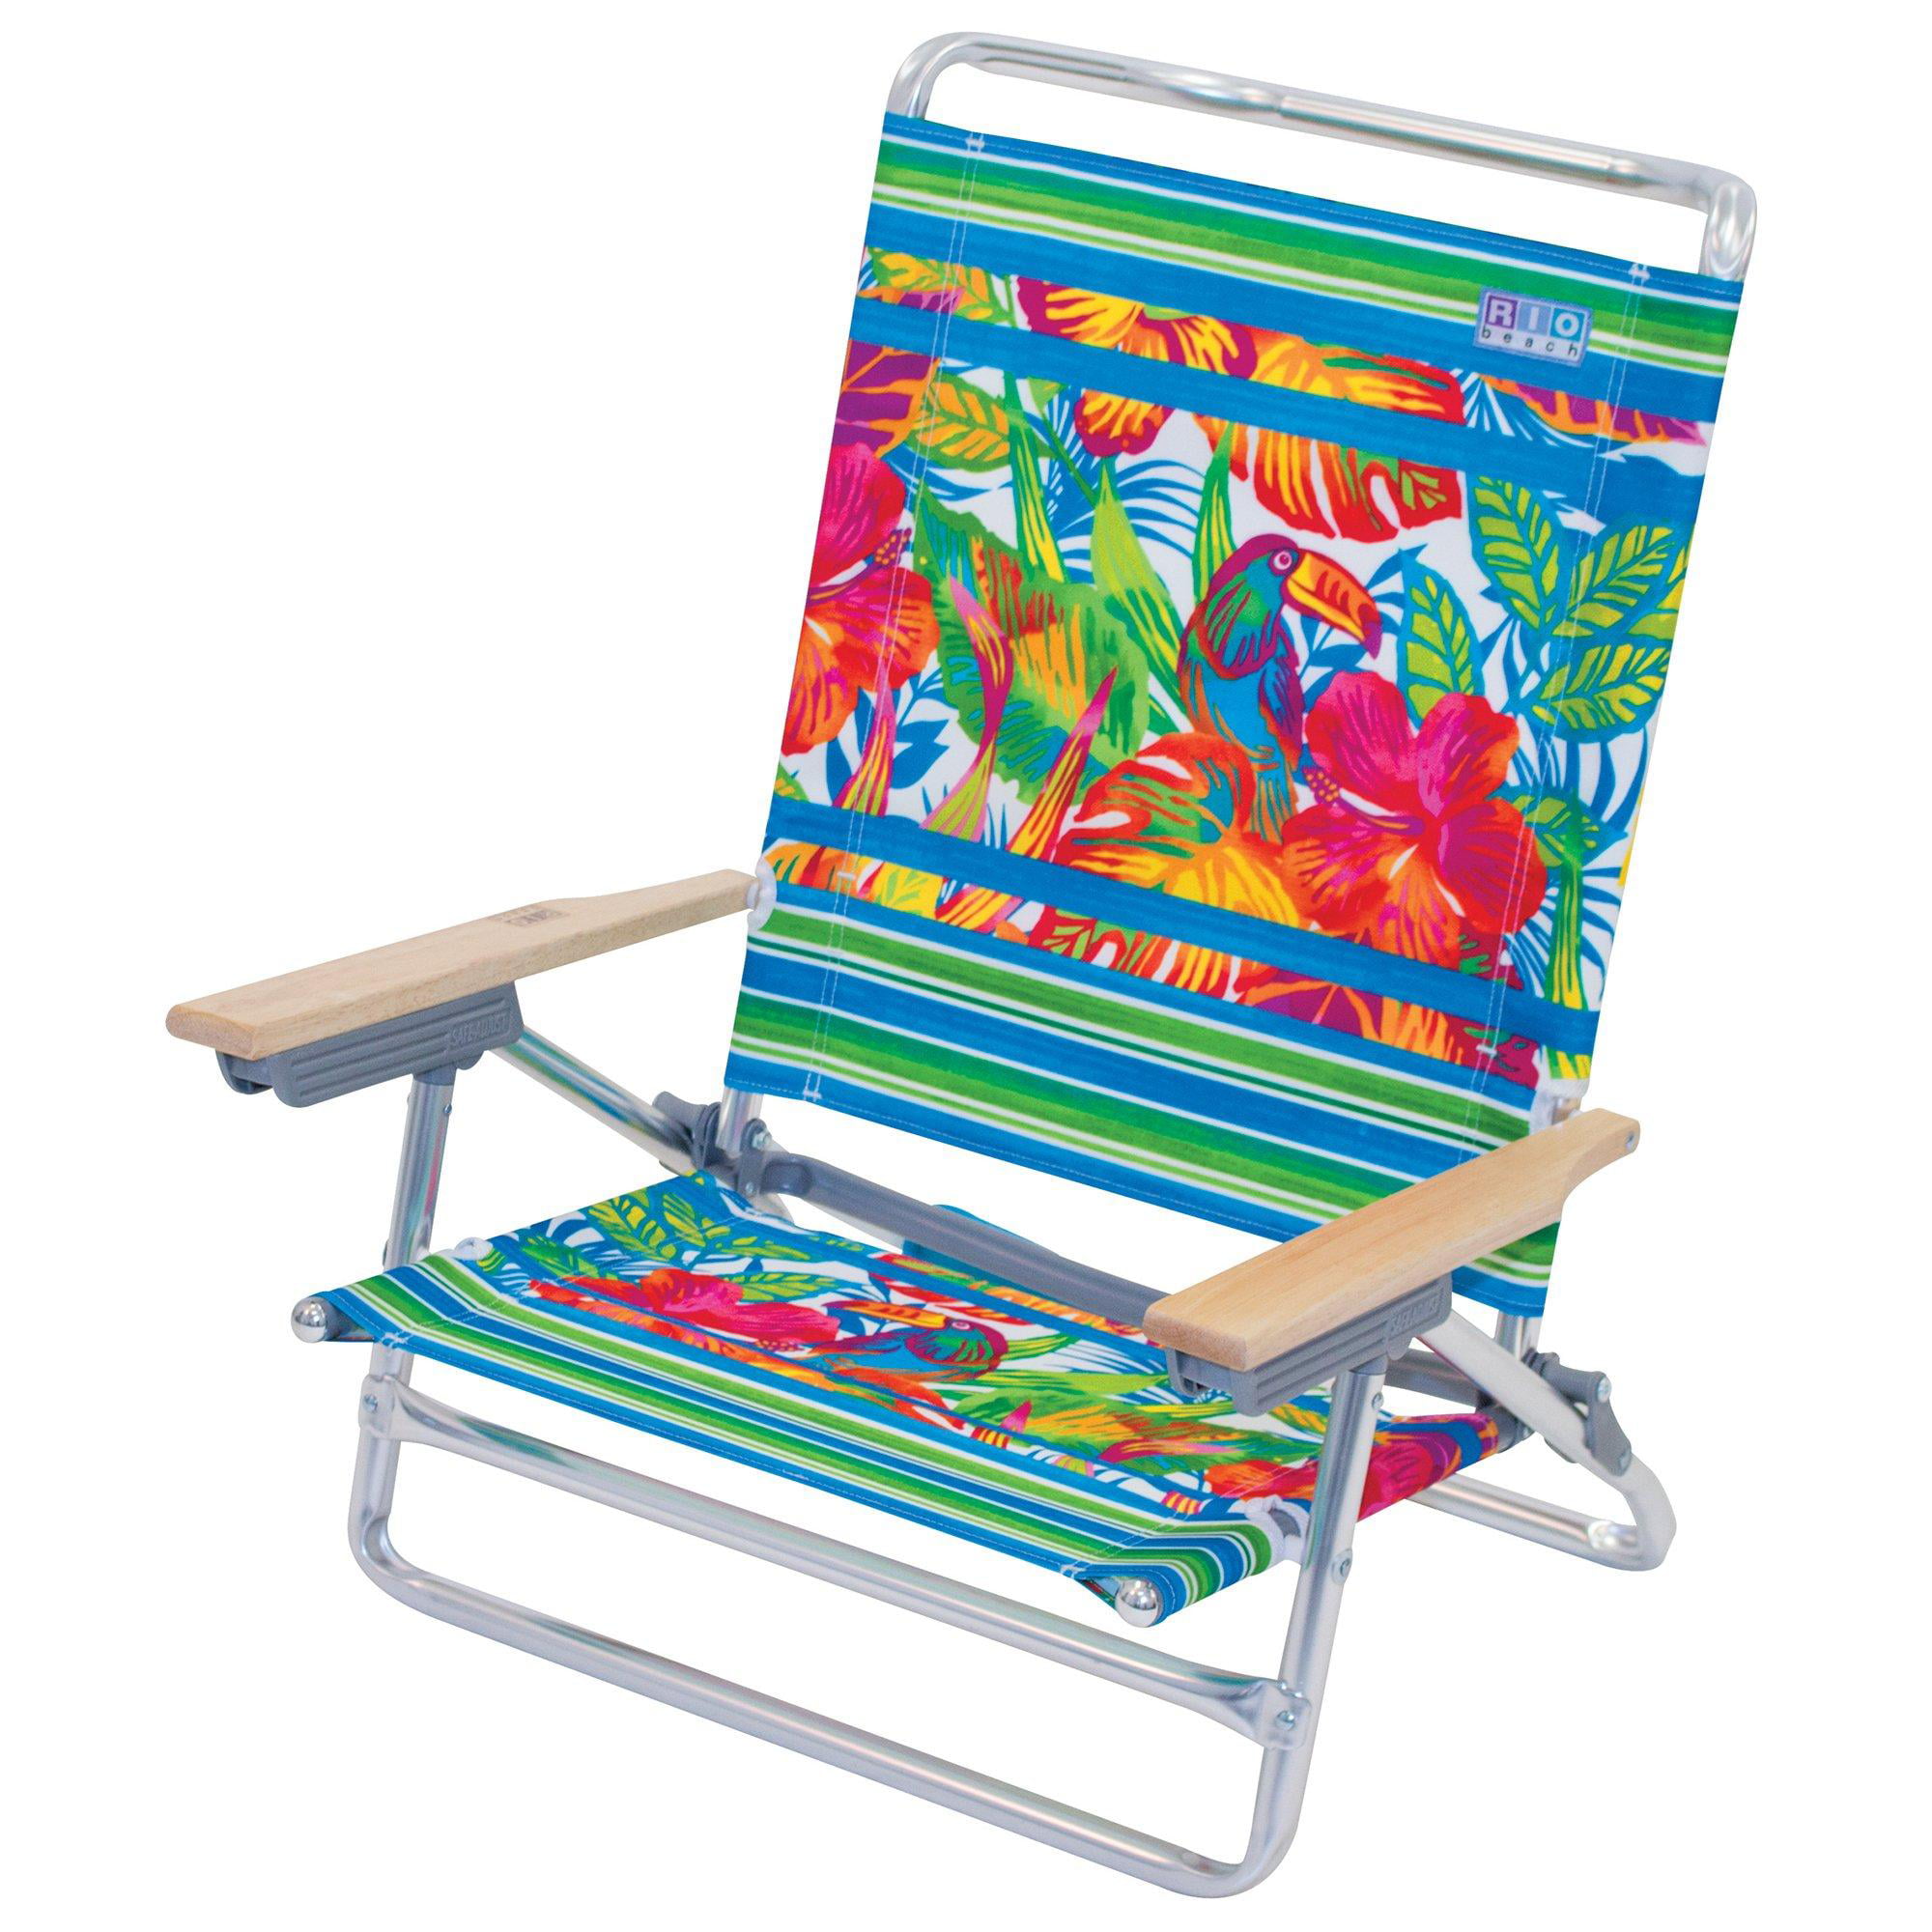 Rio 5 Position Rainbow Stripe Print Beach Chair One Size Blue/green/yellow/pink 